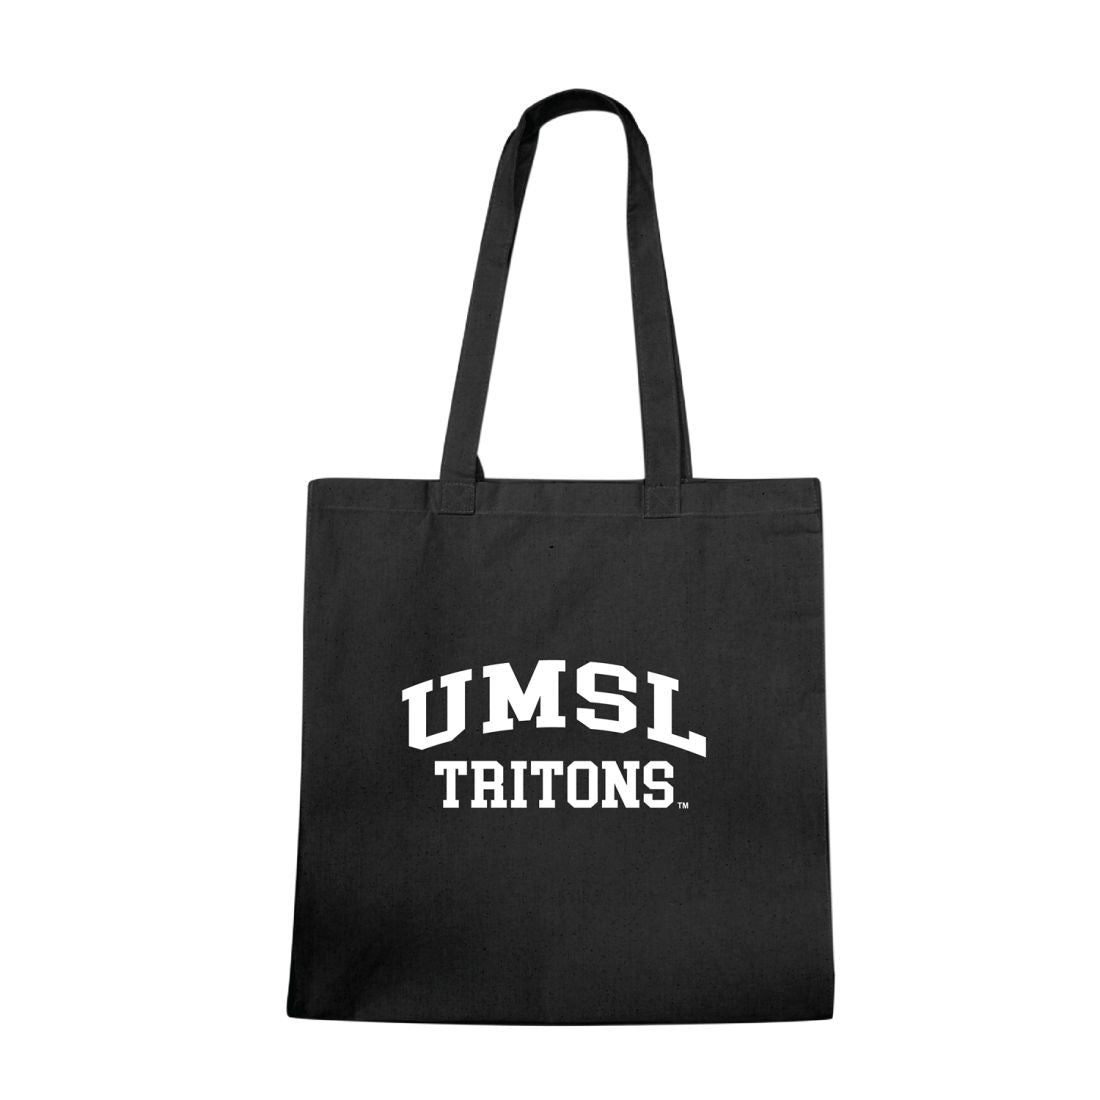 University of Missouri-Saint Louis Tritons Institutional Seal Tote Bag